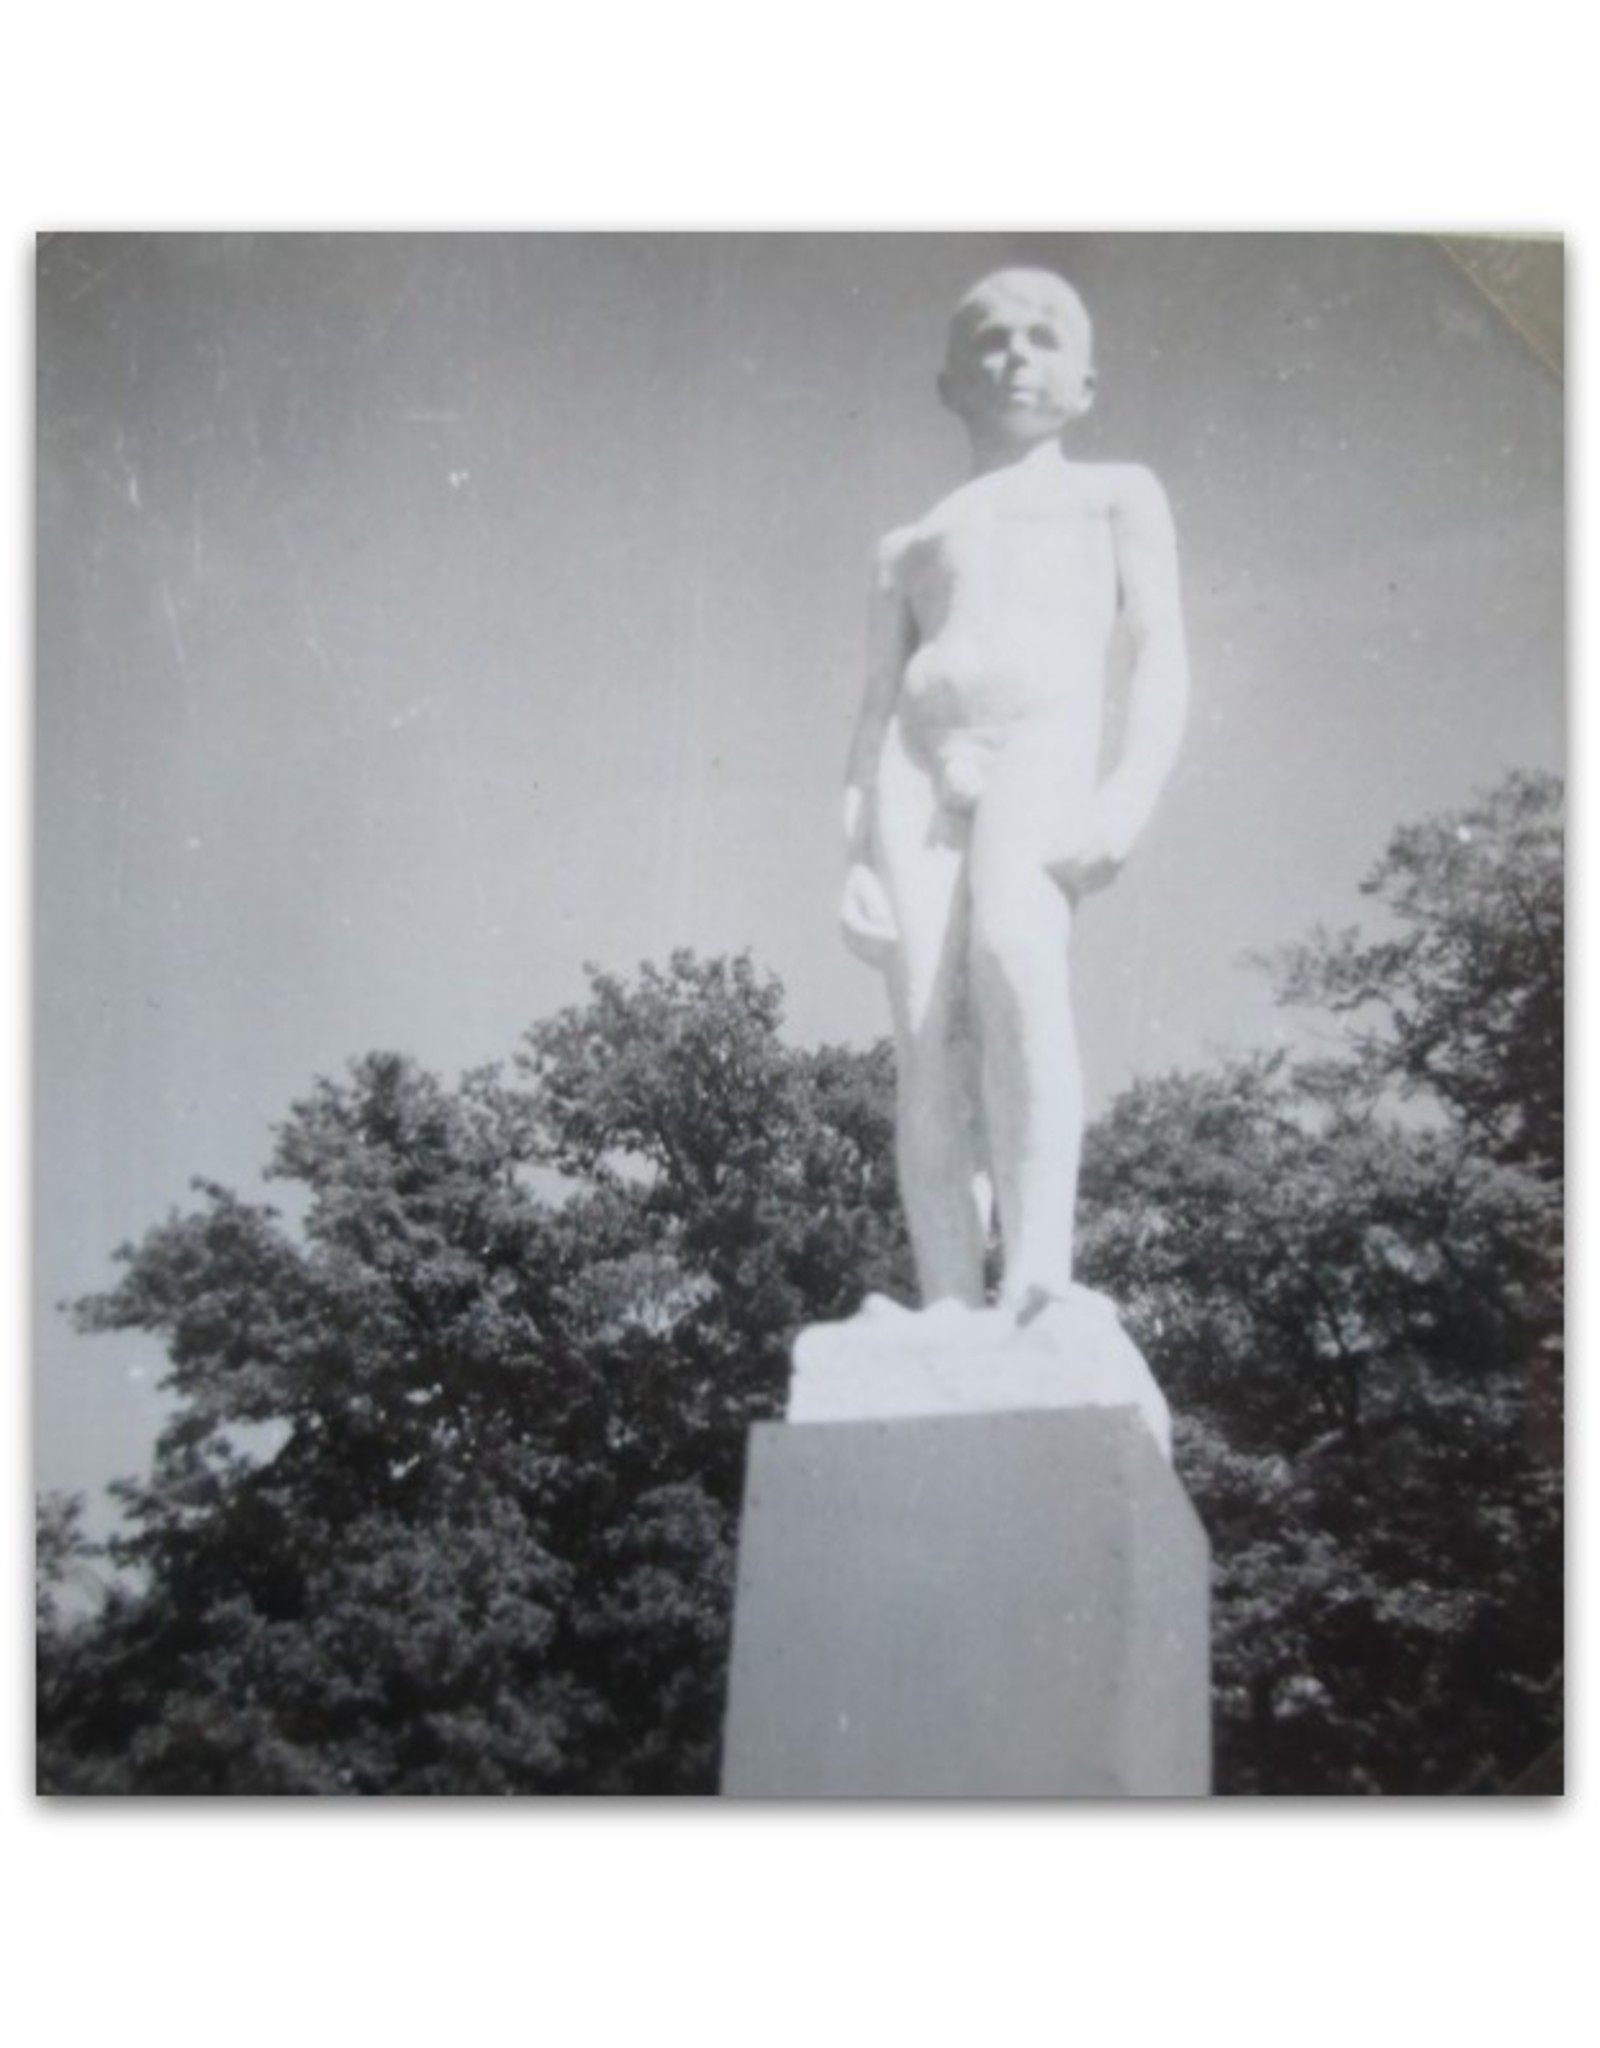 Sonsbeek '49 Europese Beeldhouwkunst in de open lucht: Arnhem 1 juli - 18 september 1949